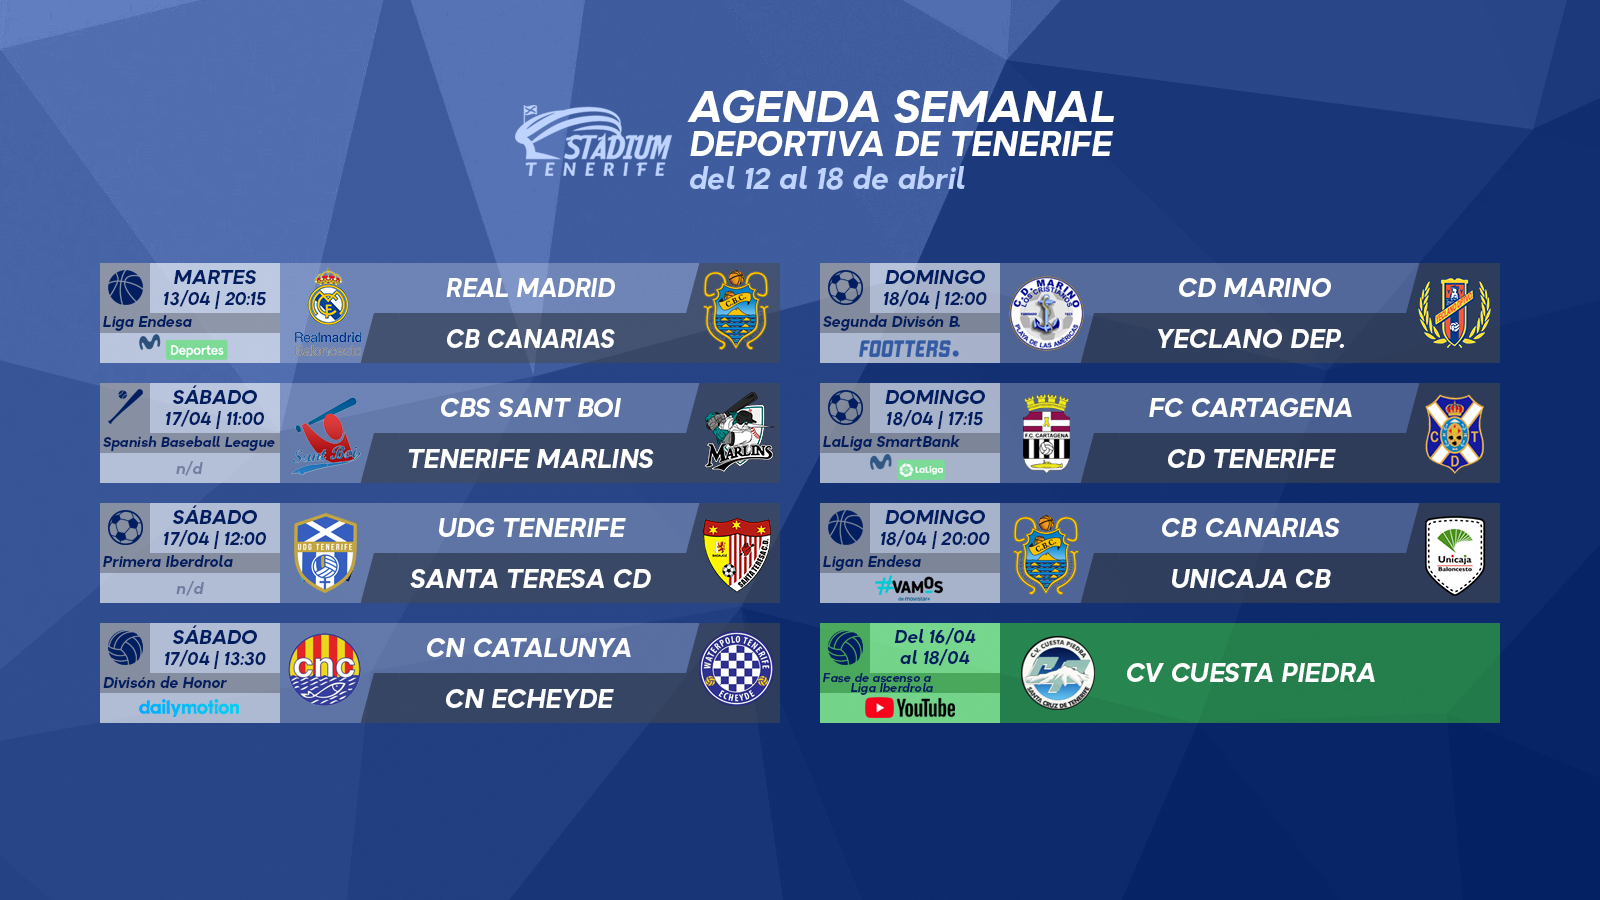 Agenda Semanal Deportiva de Tenerife (12 al 18 de abril)